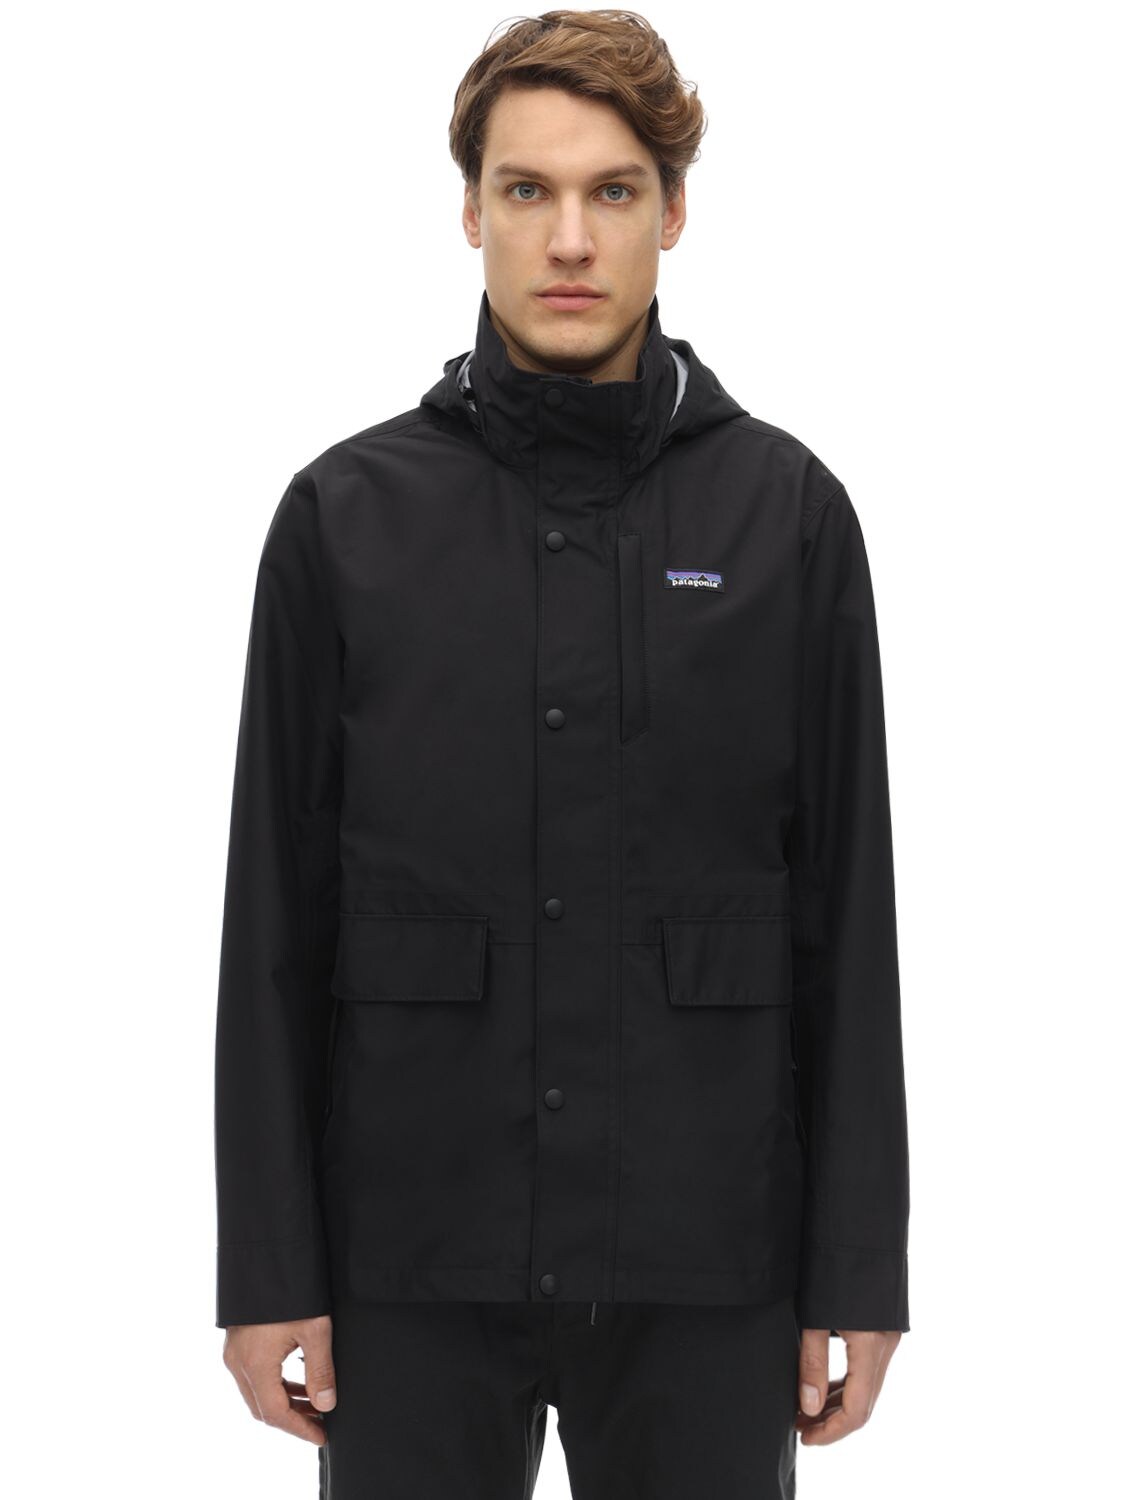 Patagonia Lightweight Storm Jacket In Black